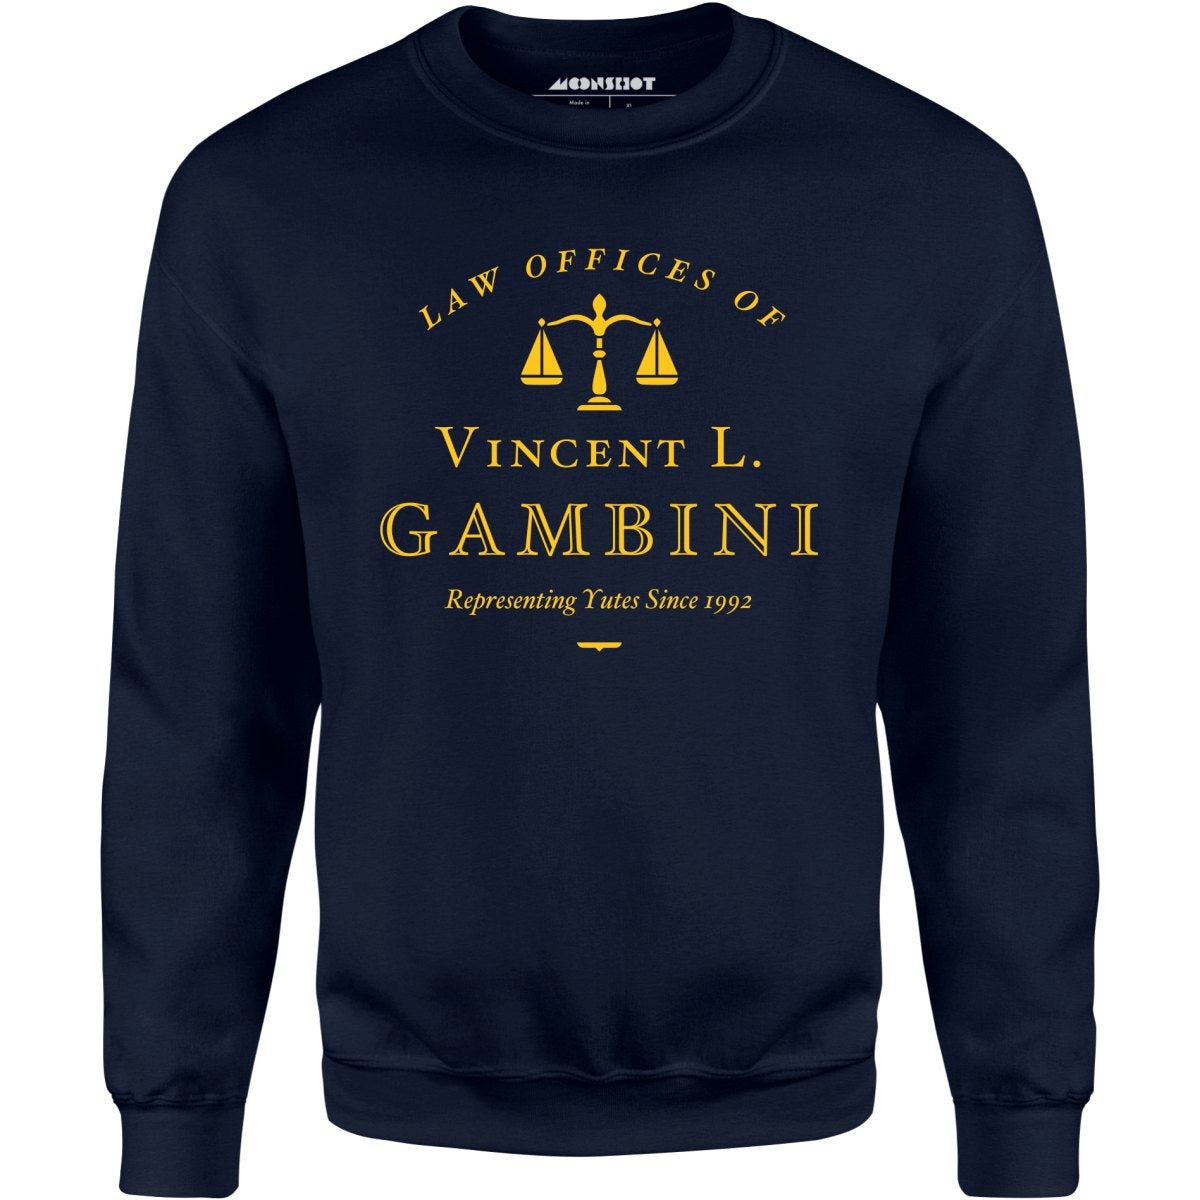 Law Offices of Vincent L. Gambini - Unisex Sweatshirt